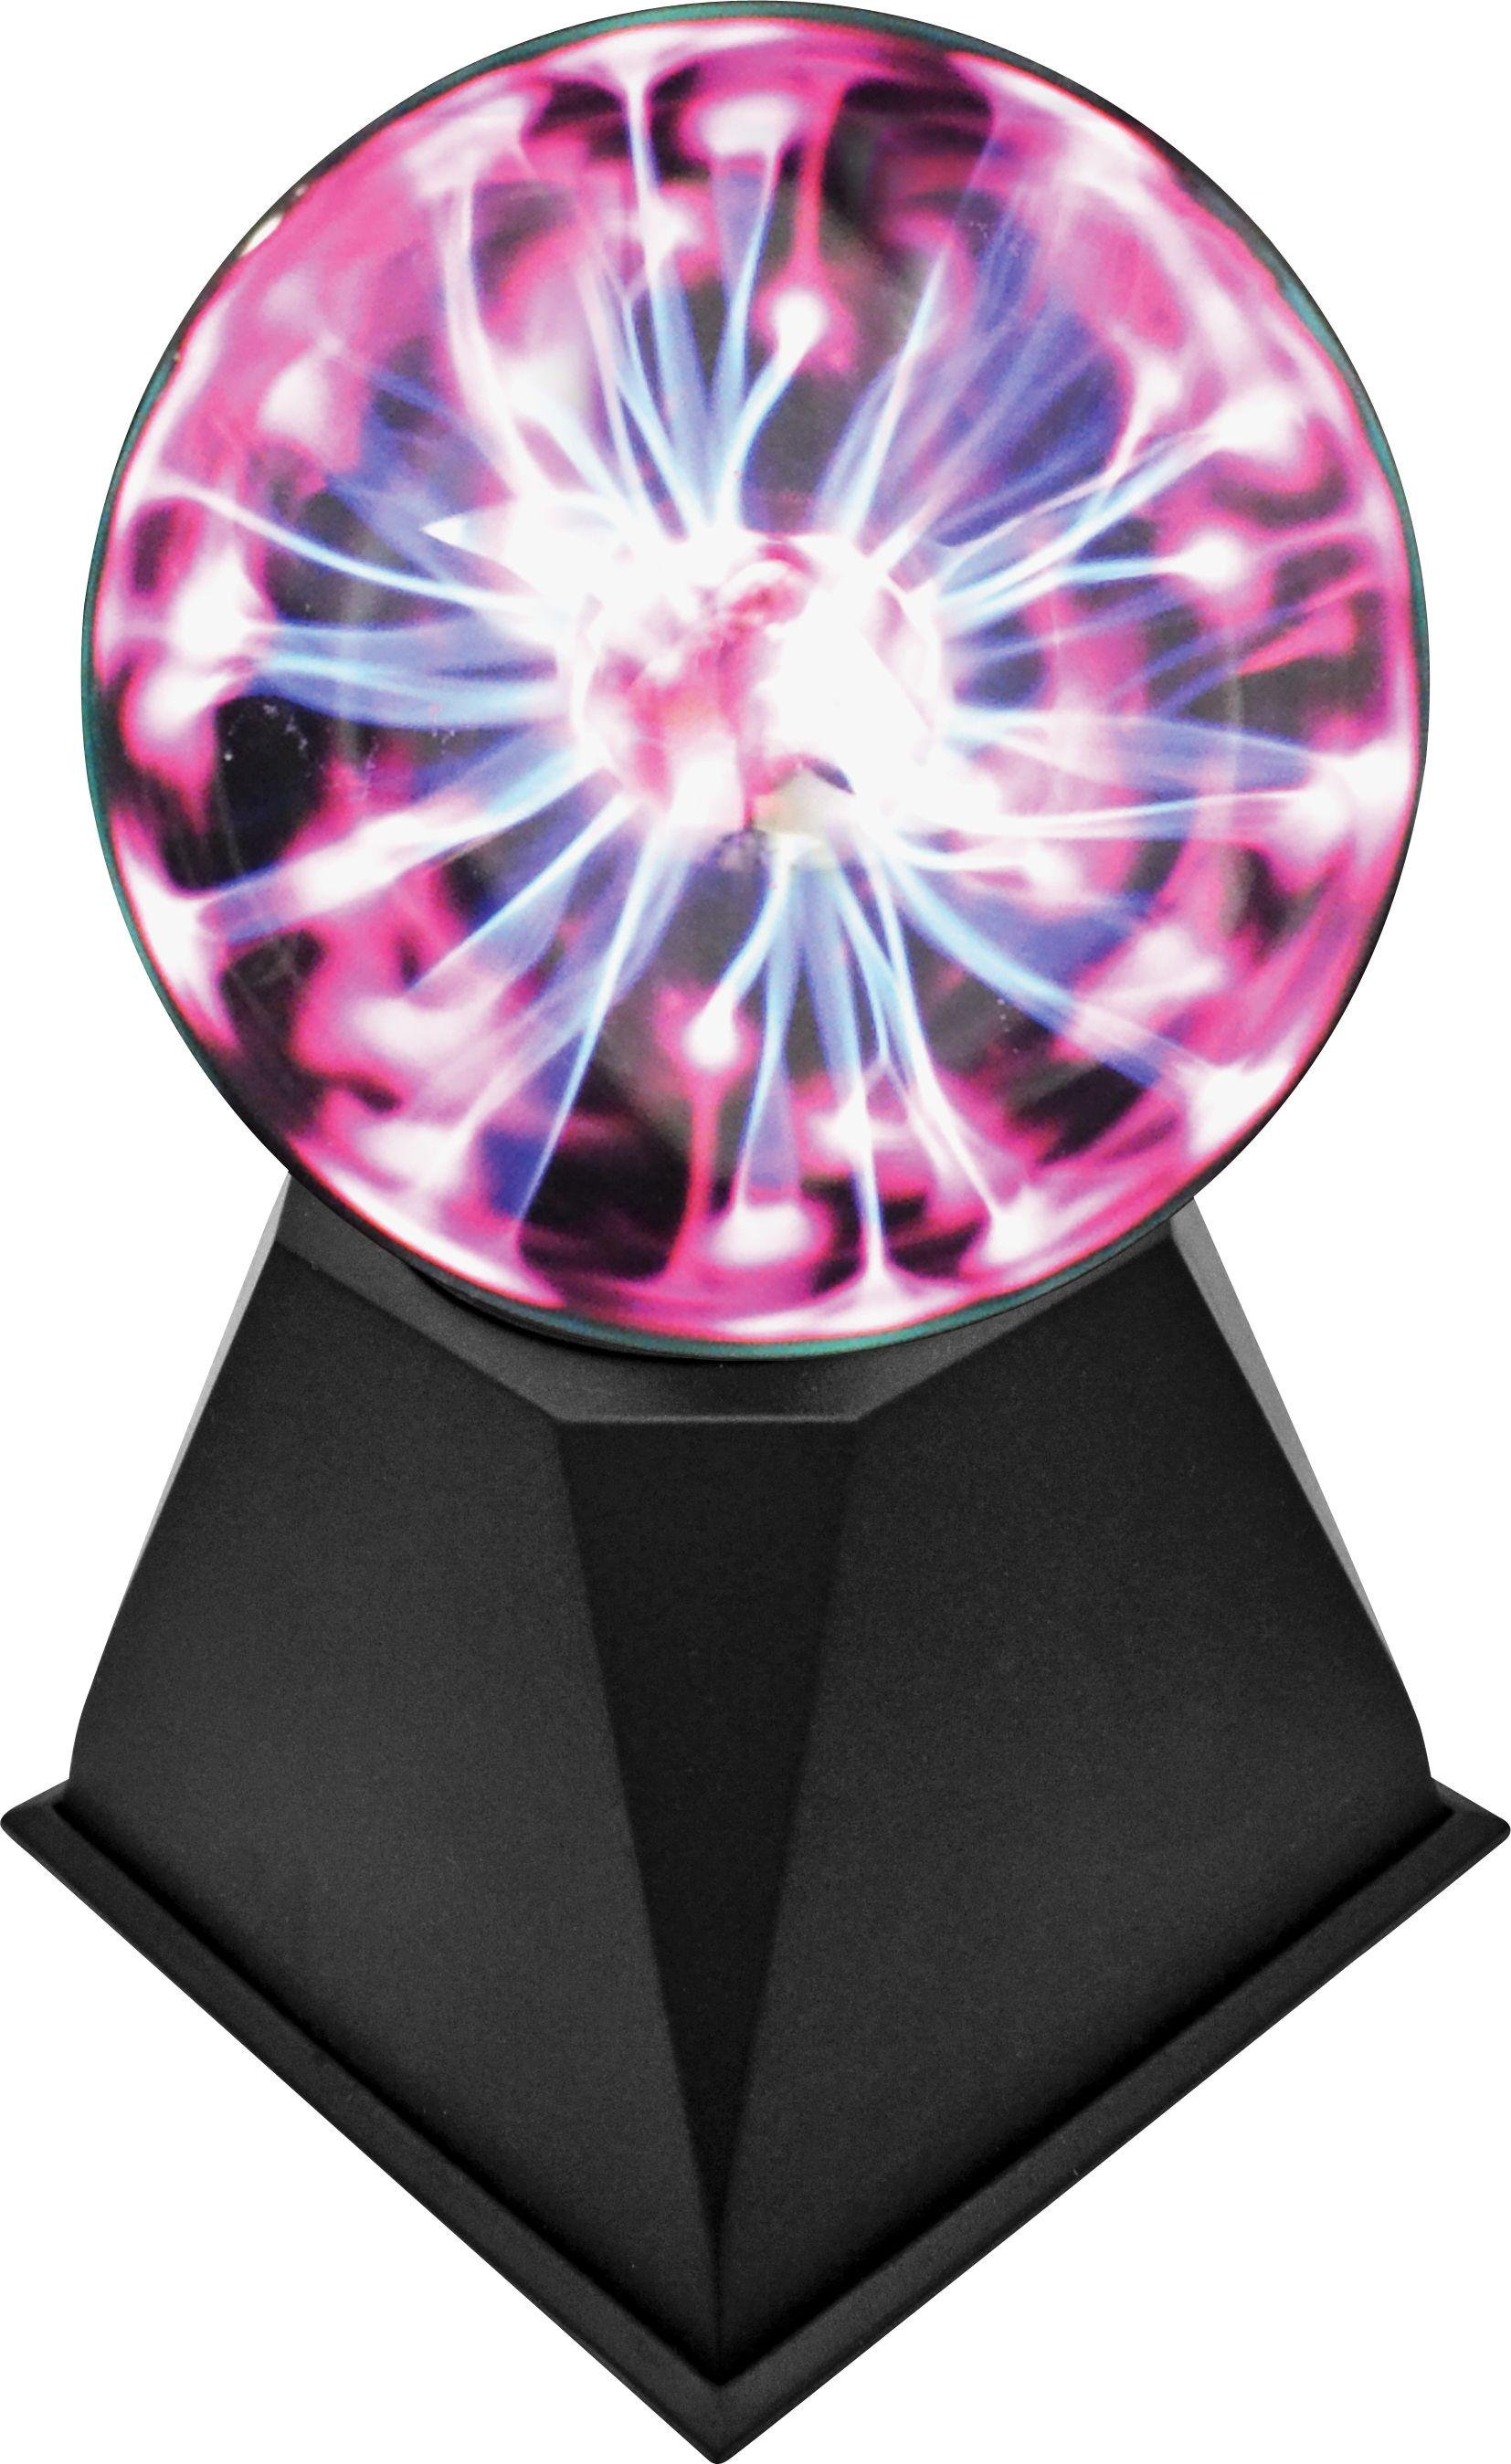 Plasma Ball Lamp review